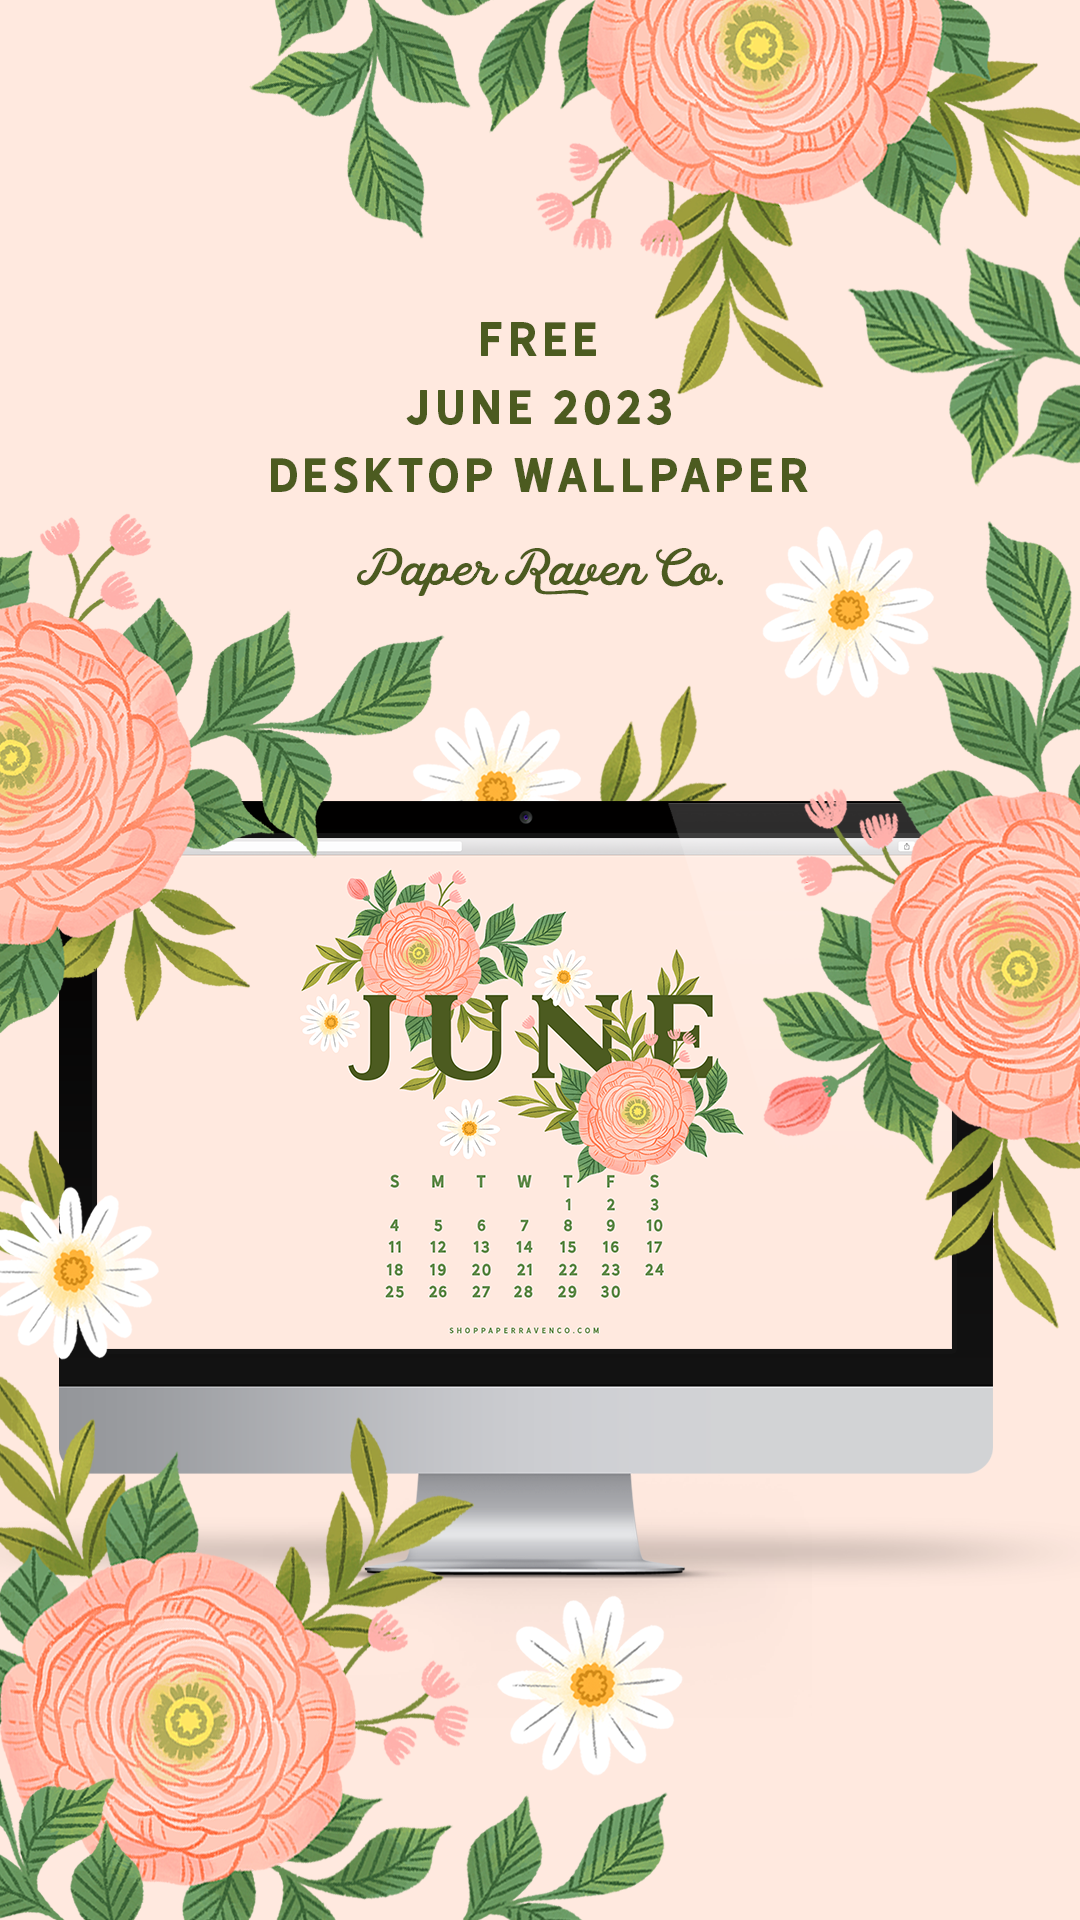 June 2023 Illustrated Desktop Wallpaper by Paper Raven Co. #dressyourtech #desktopwallpaper